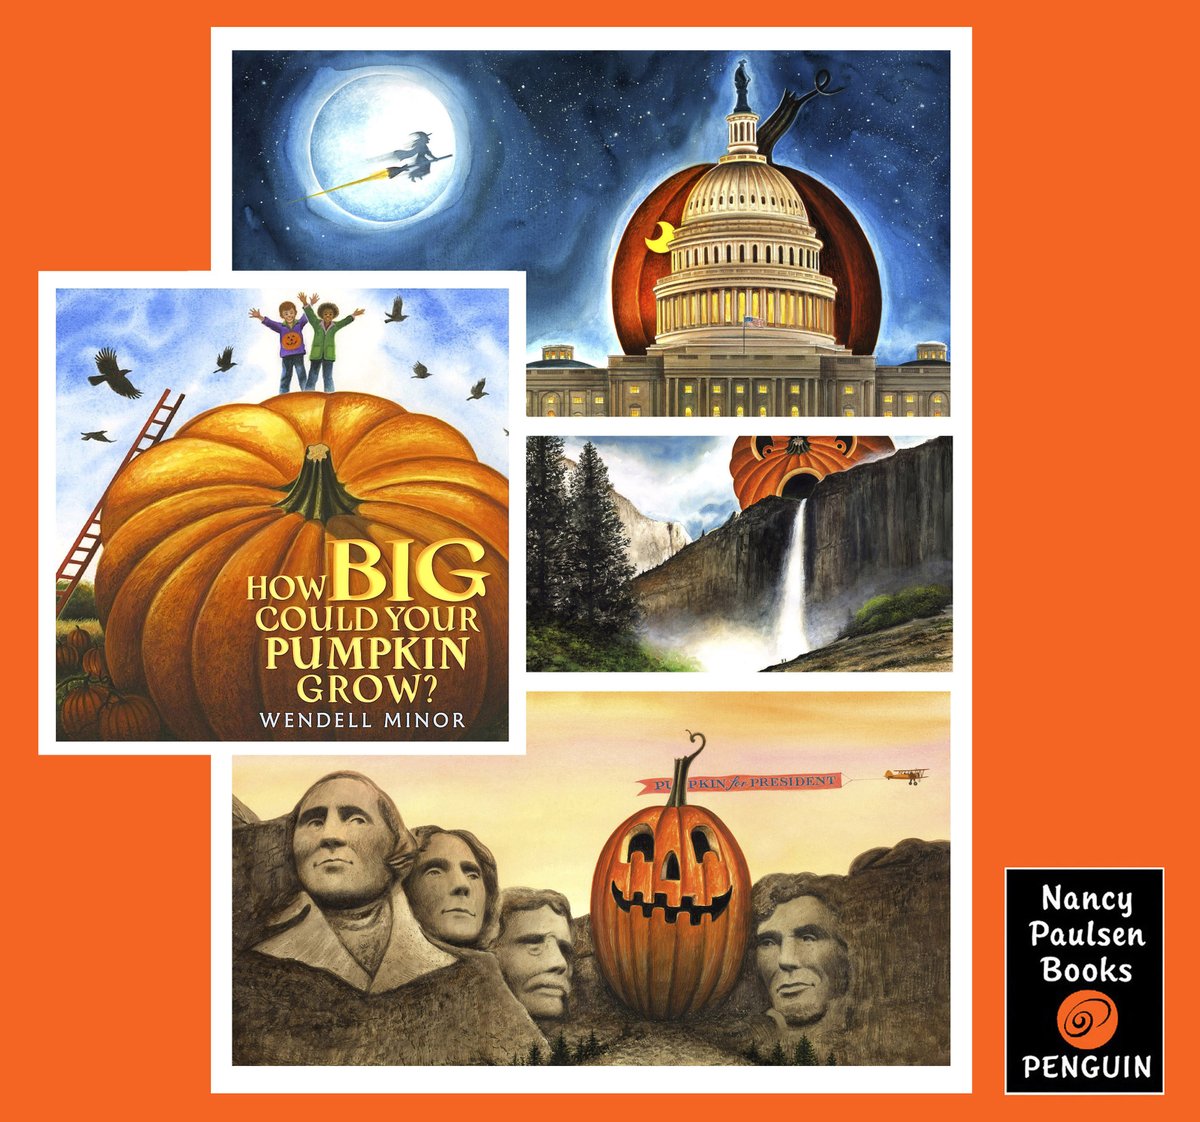 It’s #pumpkinseason again. How Big Could YOUR #Pumpkin Grow?  #nancypaulsenbooks #pumpkinregatta
#kidlit #kidlitart #childrensbooks #childrensbookart #picturebooks #illustrationforkids